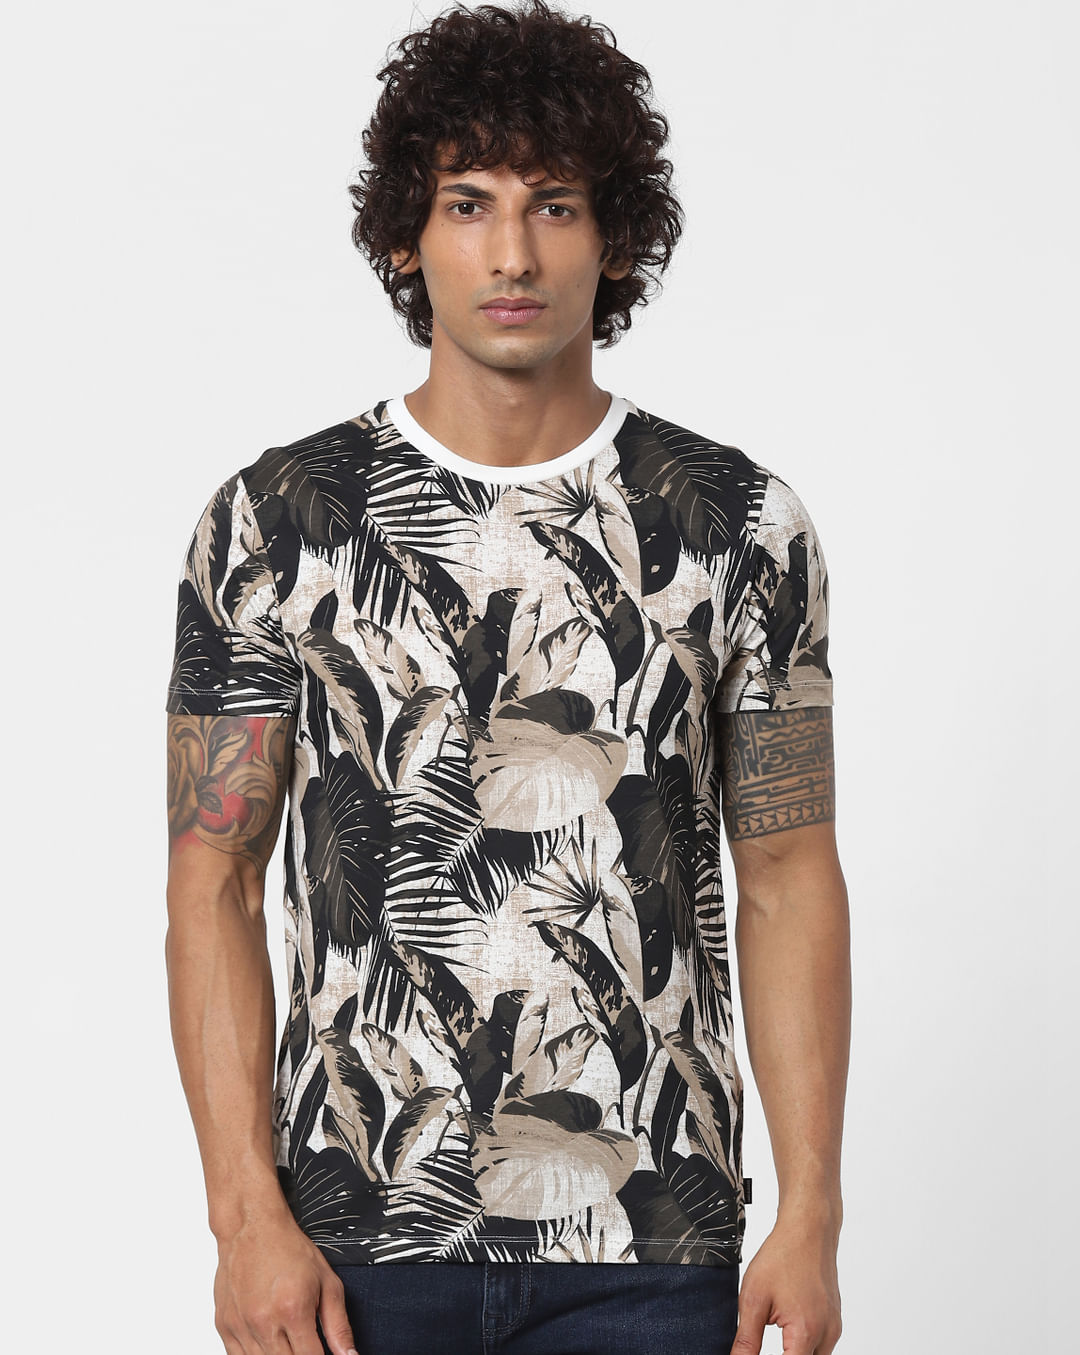 Tropical Print T Shirts - LawrenceKiernan Blog